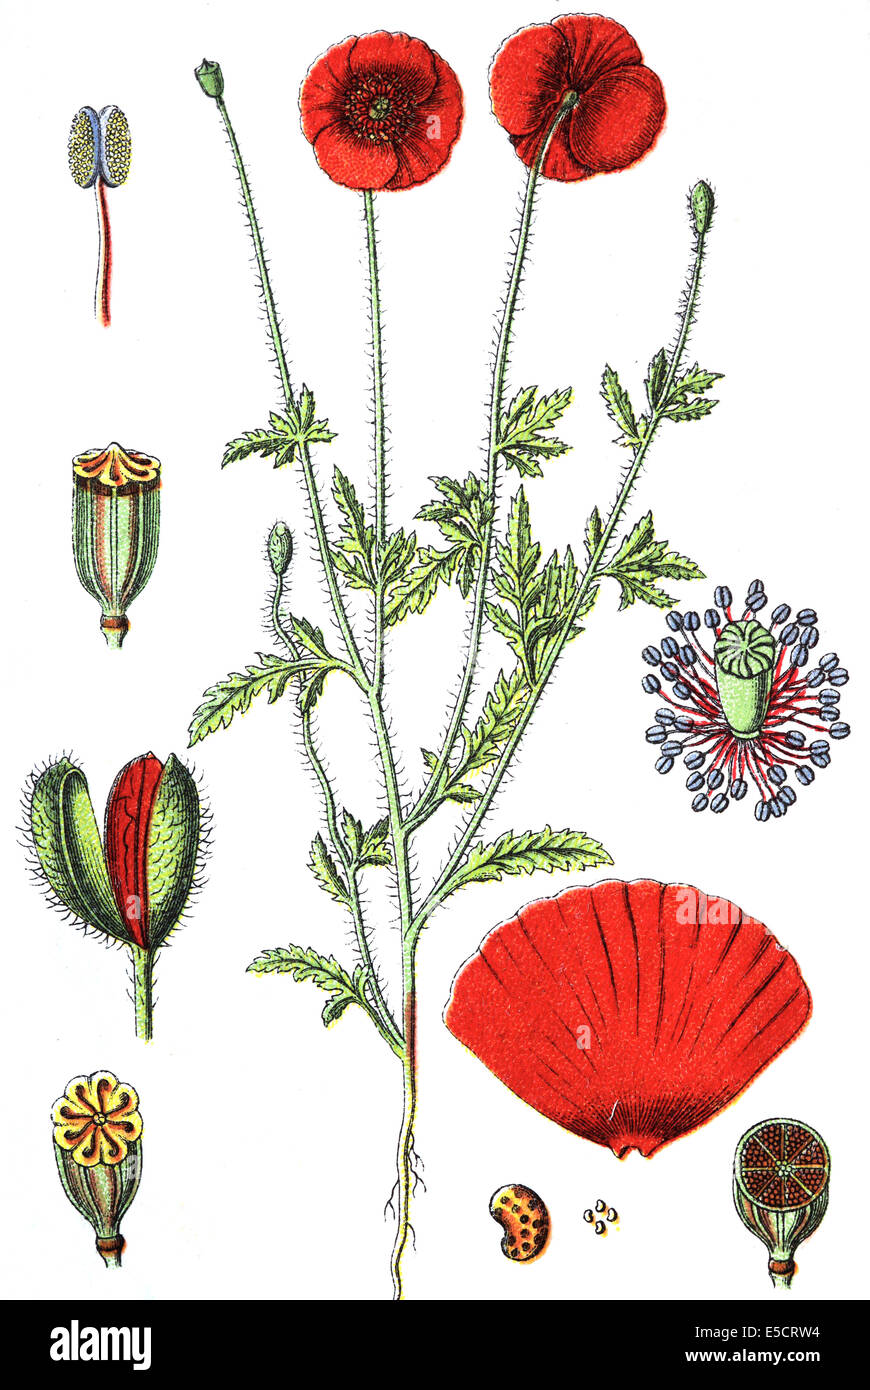 Papaver Rhoeas (häufige Namen enthalten Klatschmohn, Mais-Rose, Feld rot, roter Mohn, Mohn, Flandern Mohn Unkraut, Coquelicot, und d Stockfoto